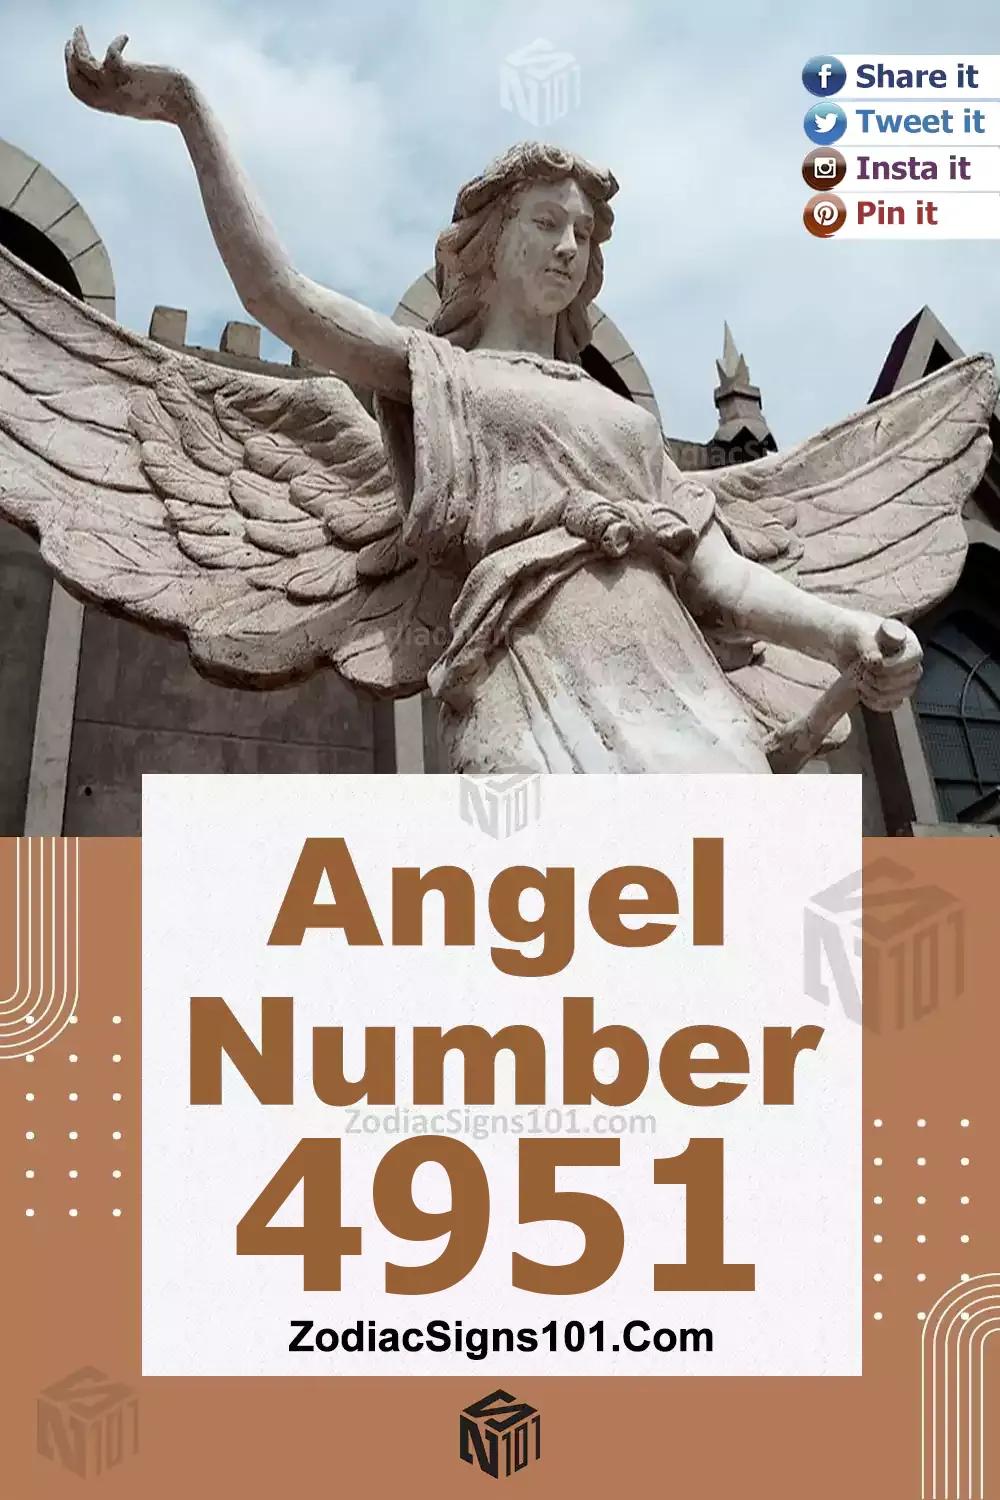 4951-Angel-Number-Meaning.jpg